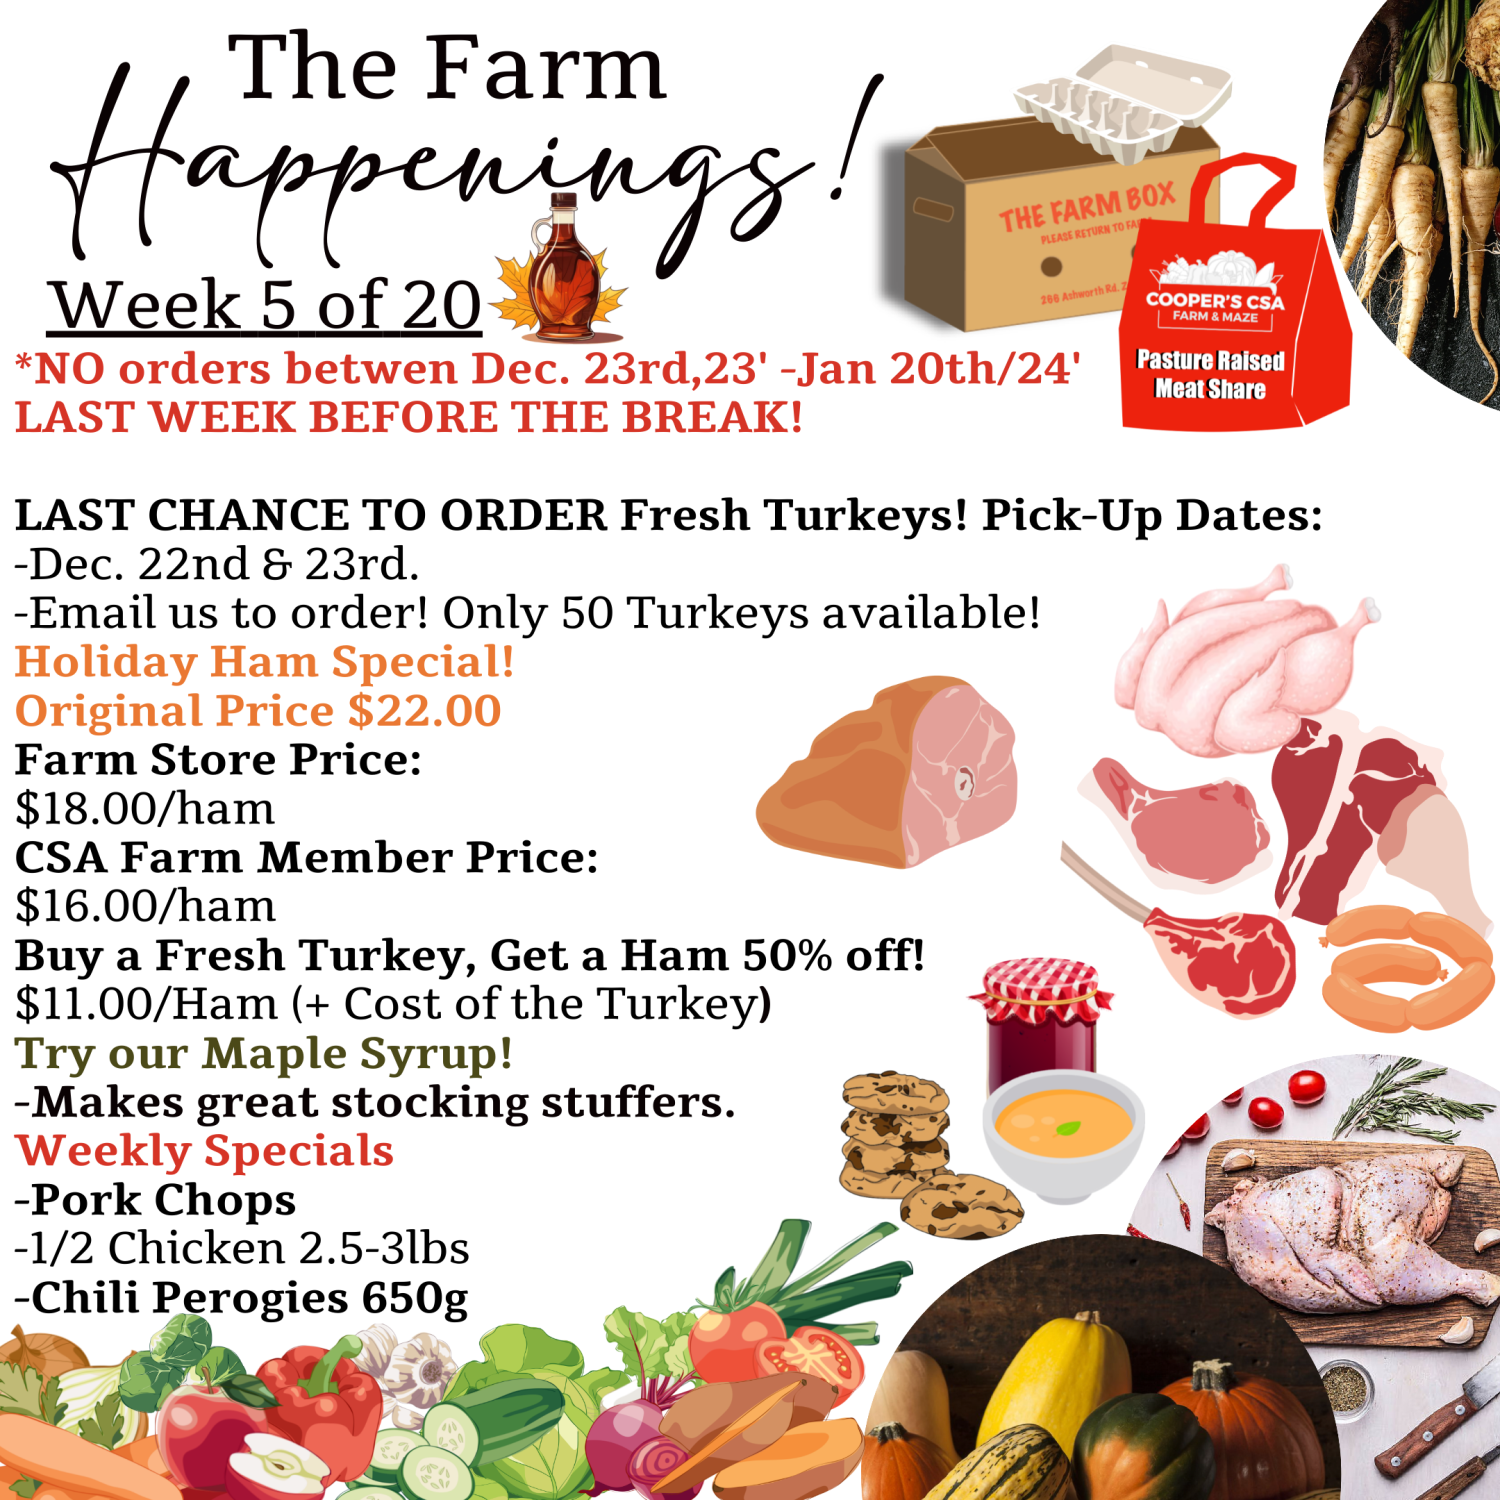 "The Farm Box"-Coopers CSA Farm Farm Happenings Dec. 19th-23rd